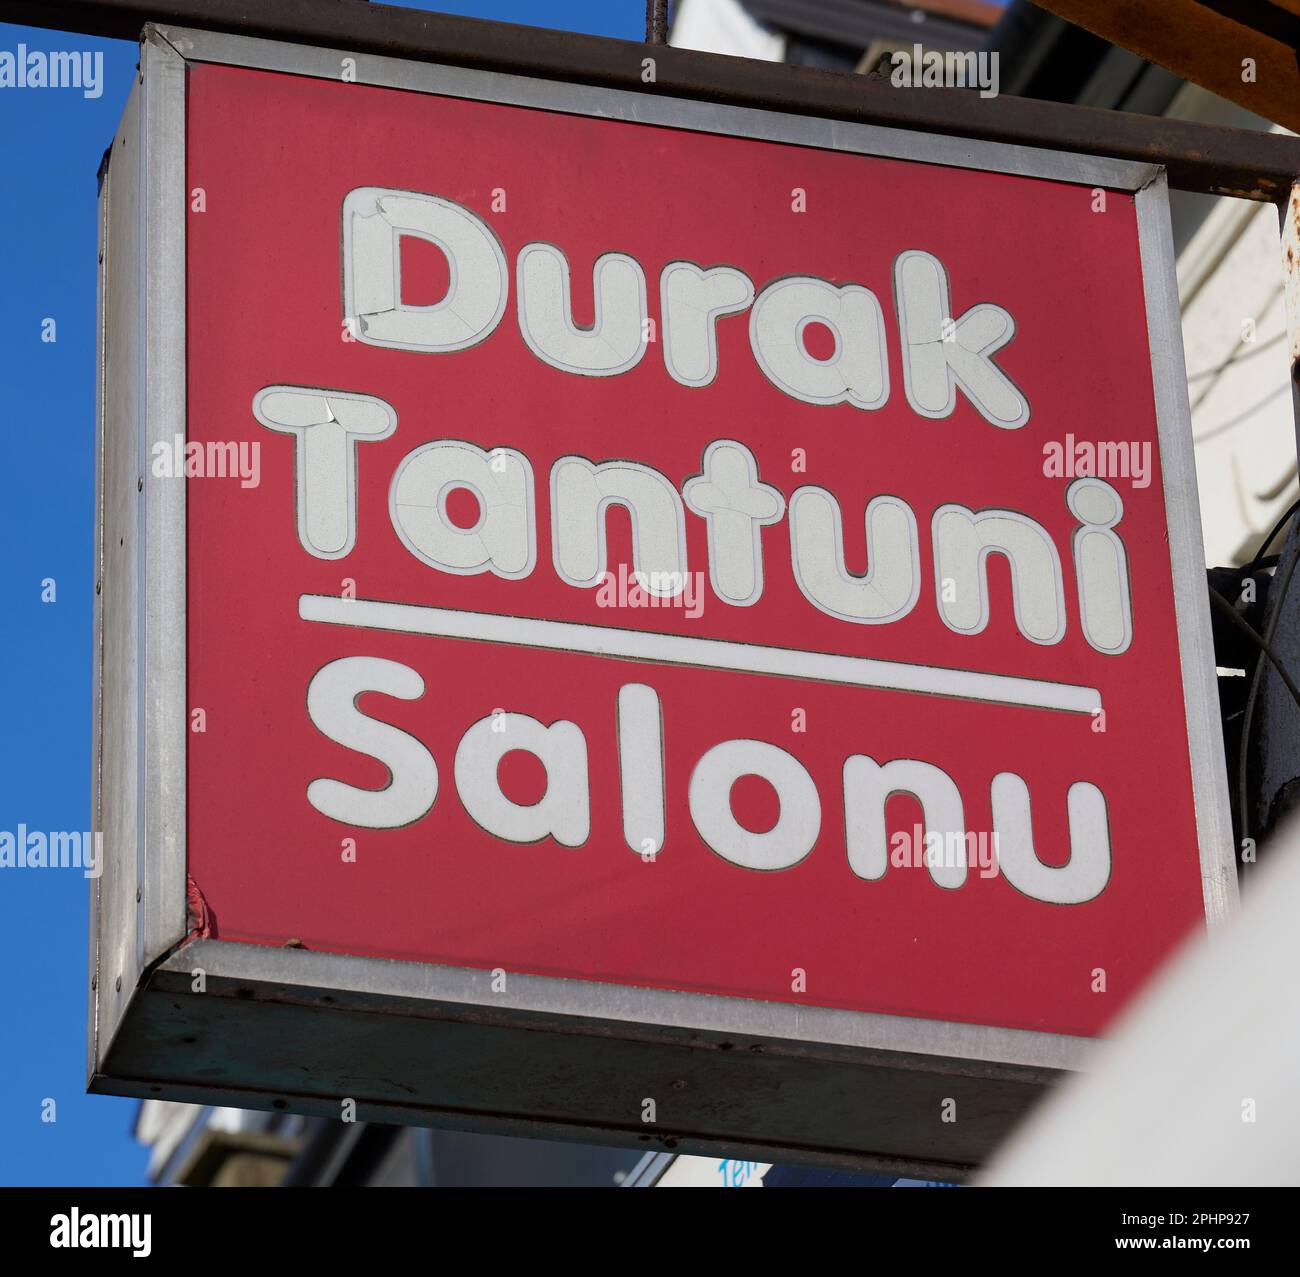 Ristorante turco Durak Tantuni, West Green Road, Duckett's Green, Harringay Ladder, London Borough of Haringey, Inghilterra, Regno Unito. Foto Stock